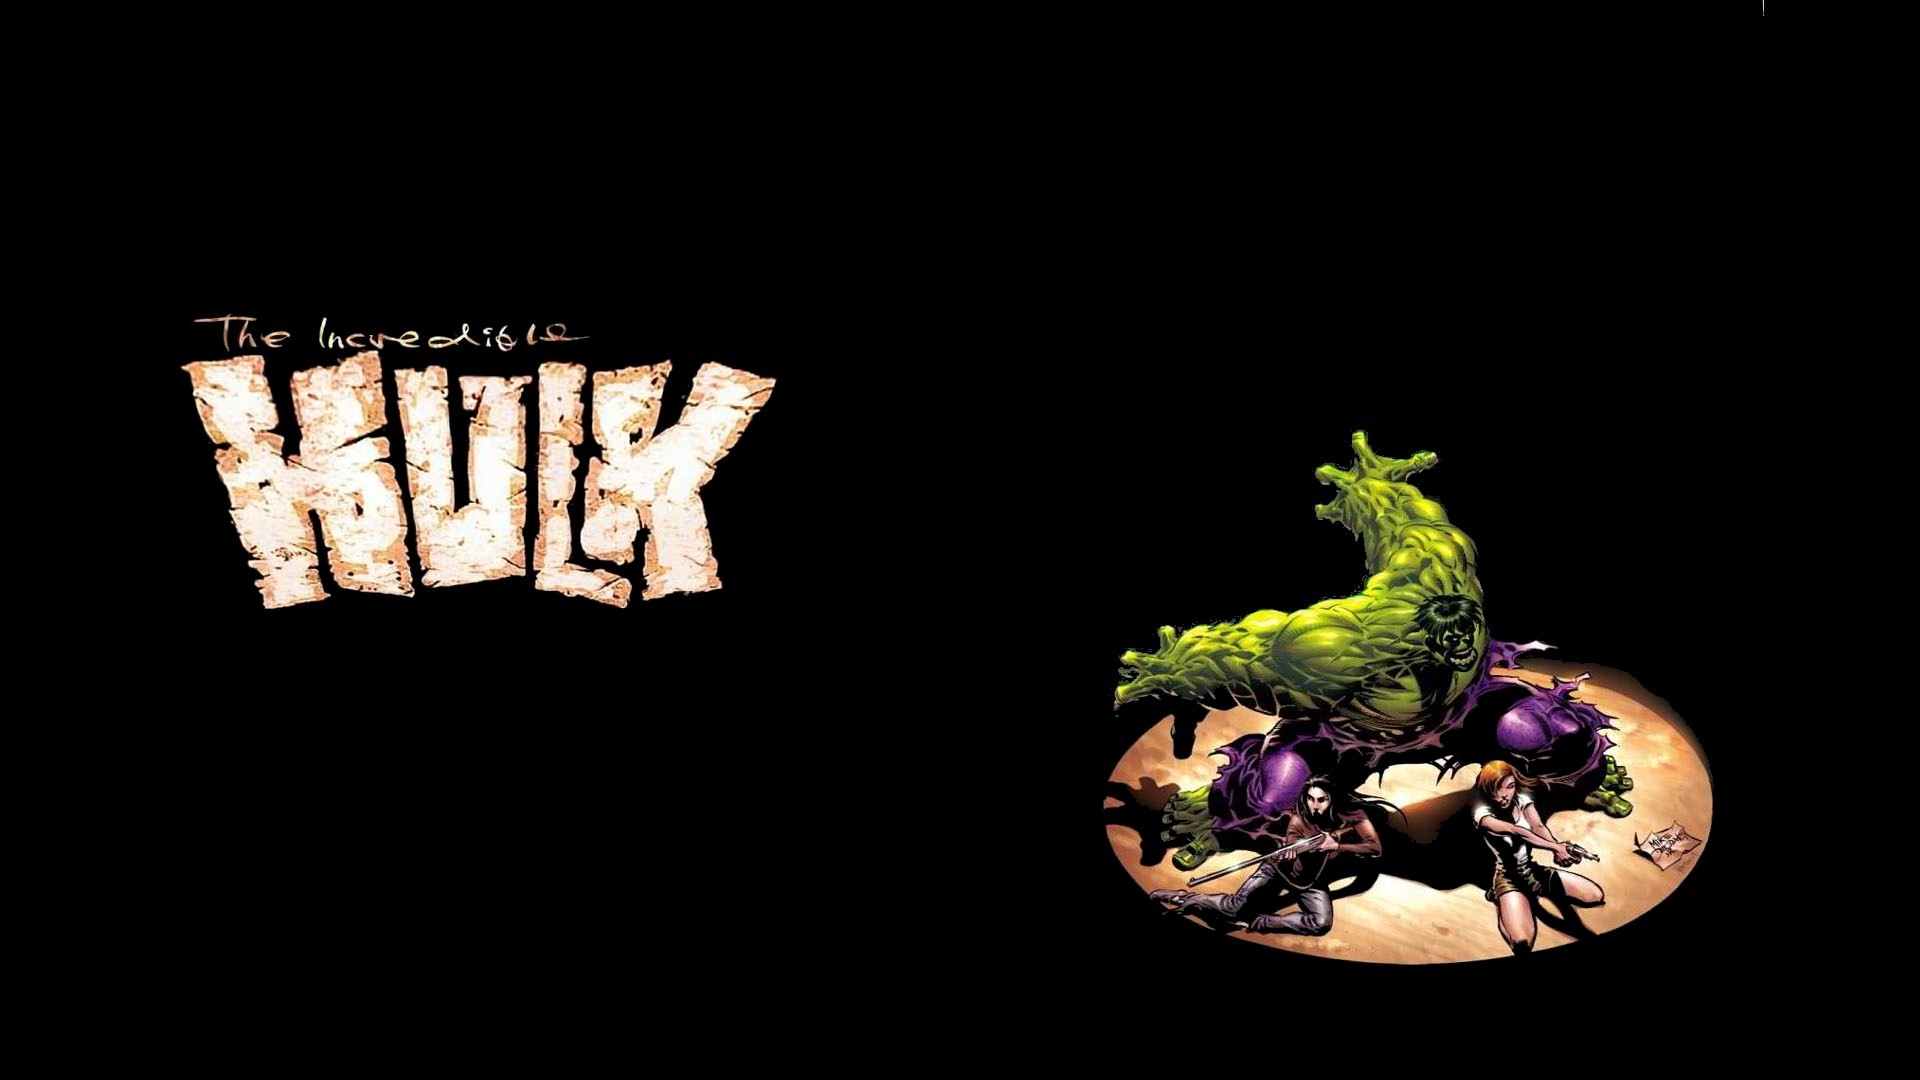 Hulk hd wallpapers 1080p windows. windows wallpaper the incredible hulk